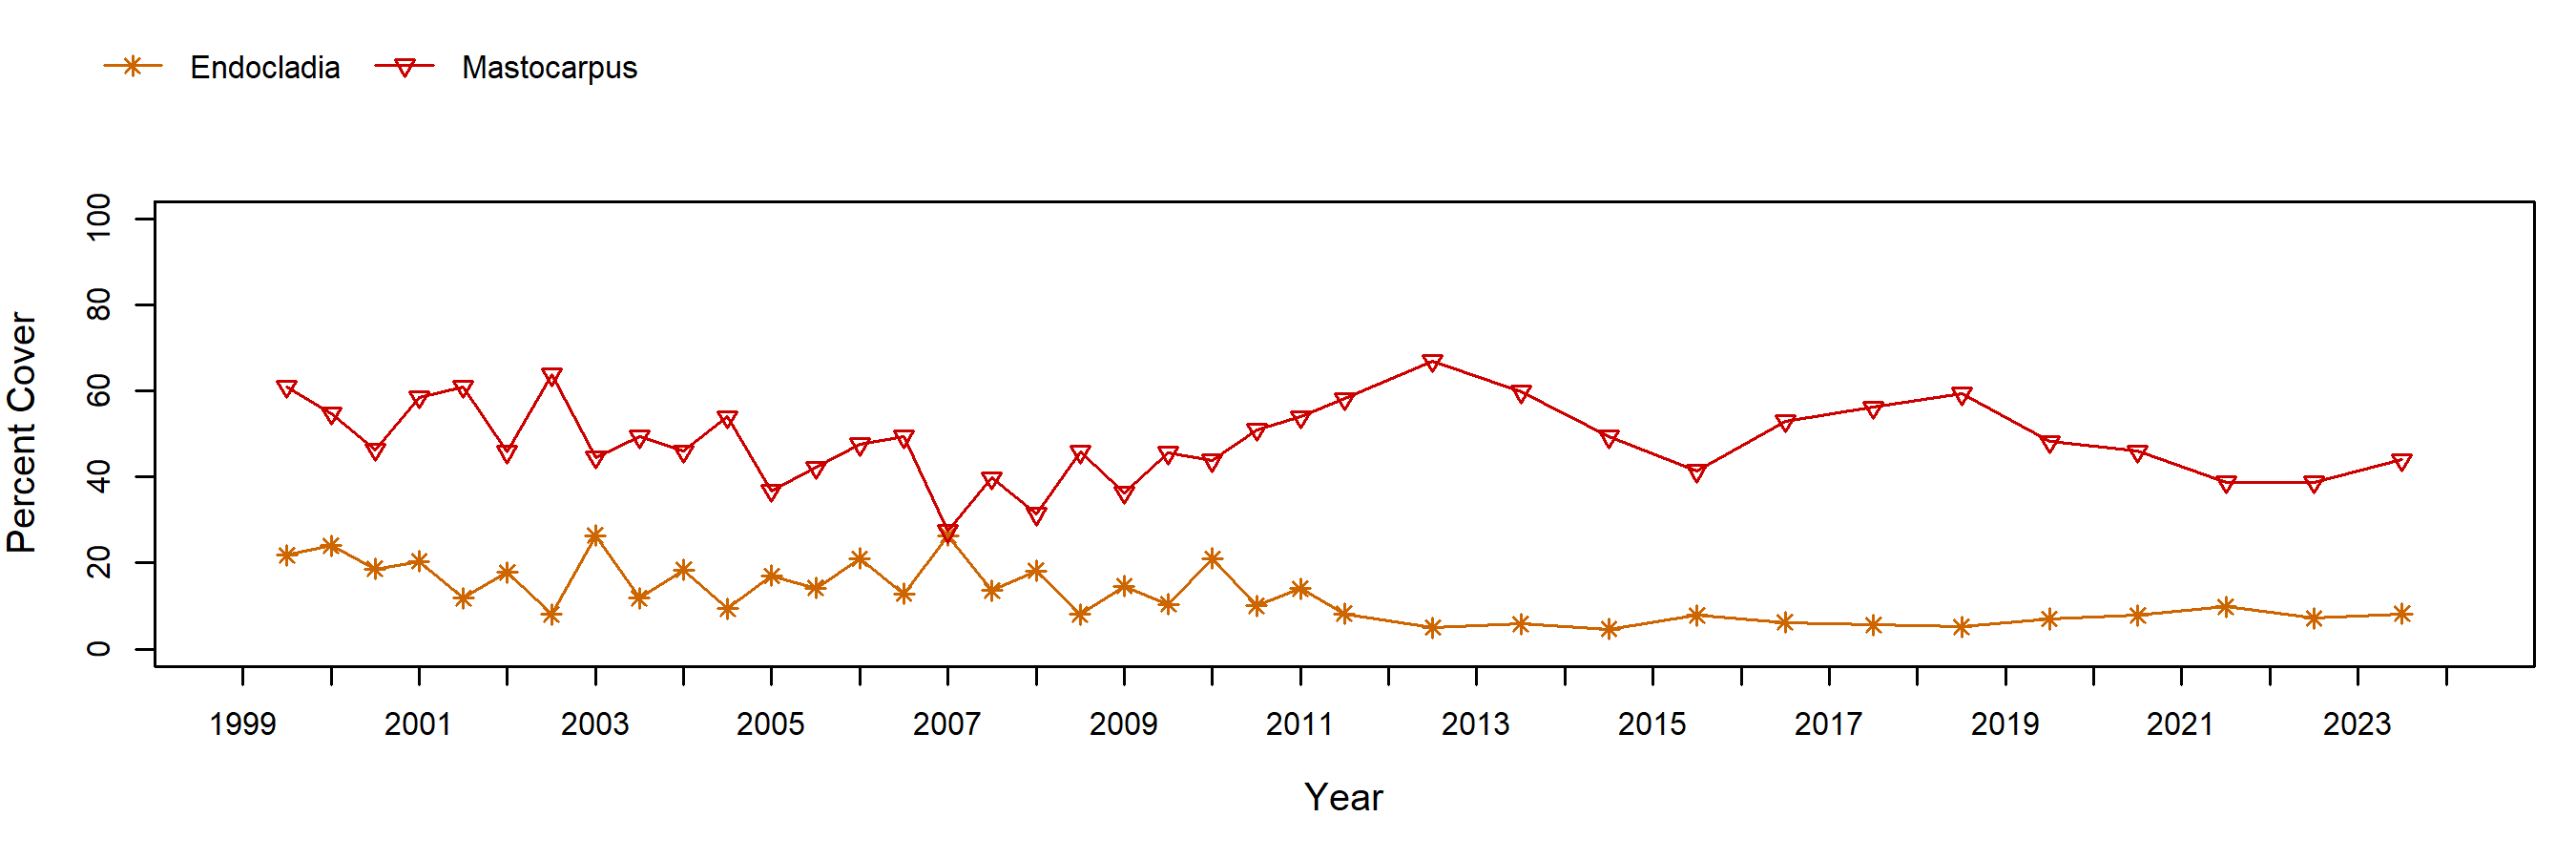 Hopkins Mastocarpus trend plot